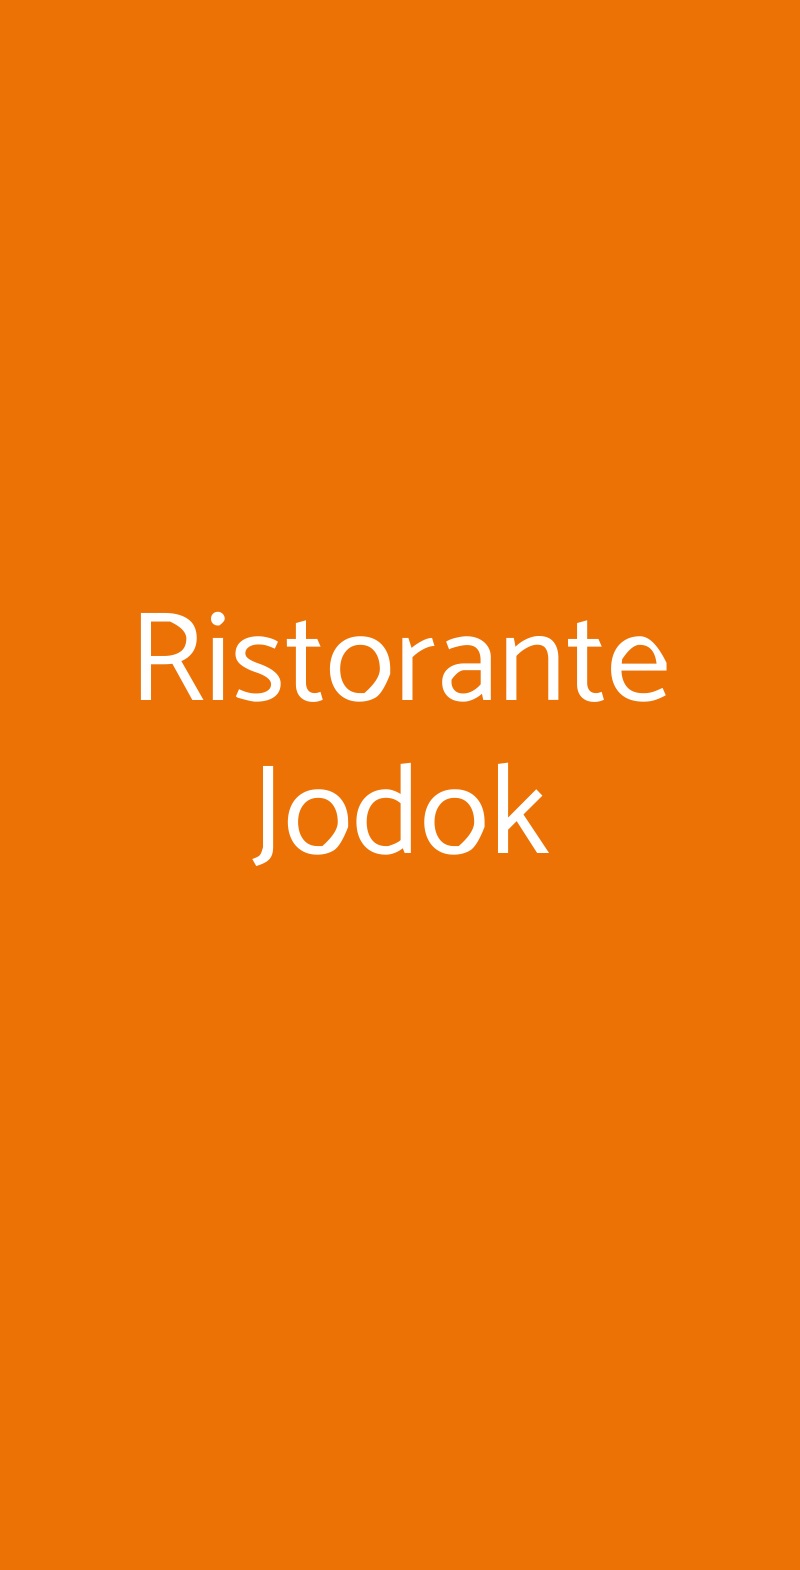 Ristorante Jodok Milano menù 1 pagina